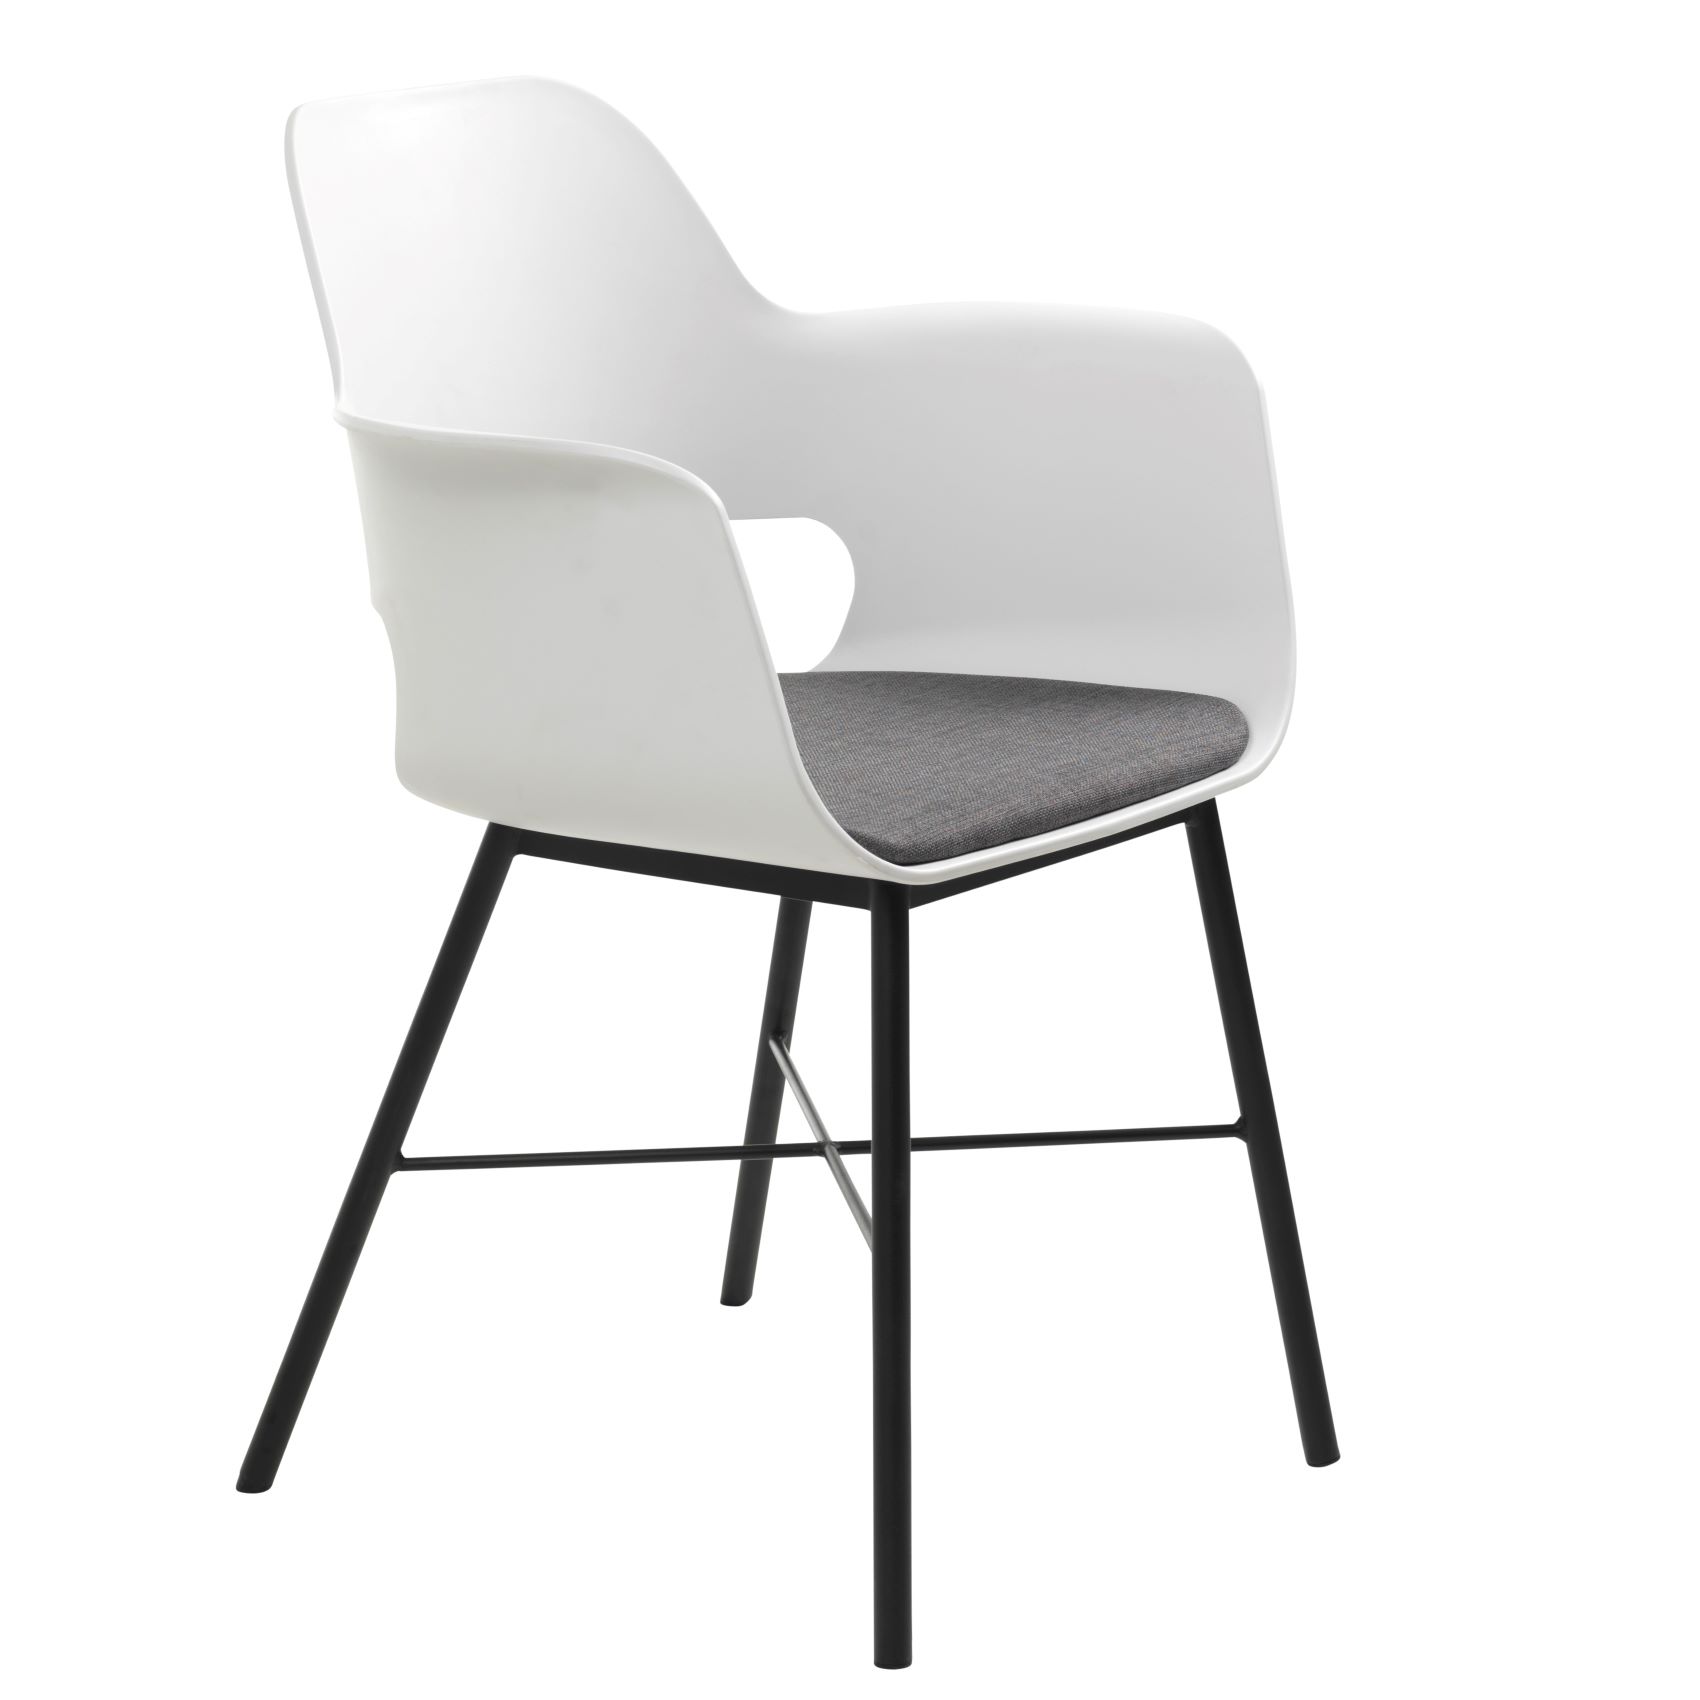 Kunststoffstuhl Gjeld - Armlehnen - skandinavisches Design- gepolsterte Sitzfläche - weiß